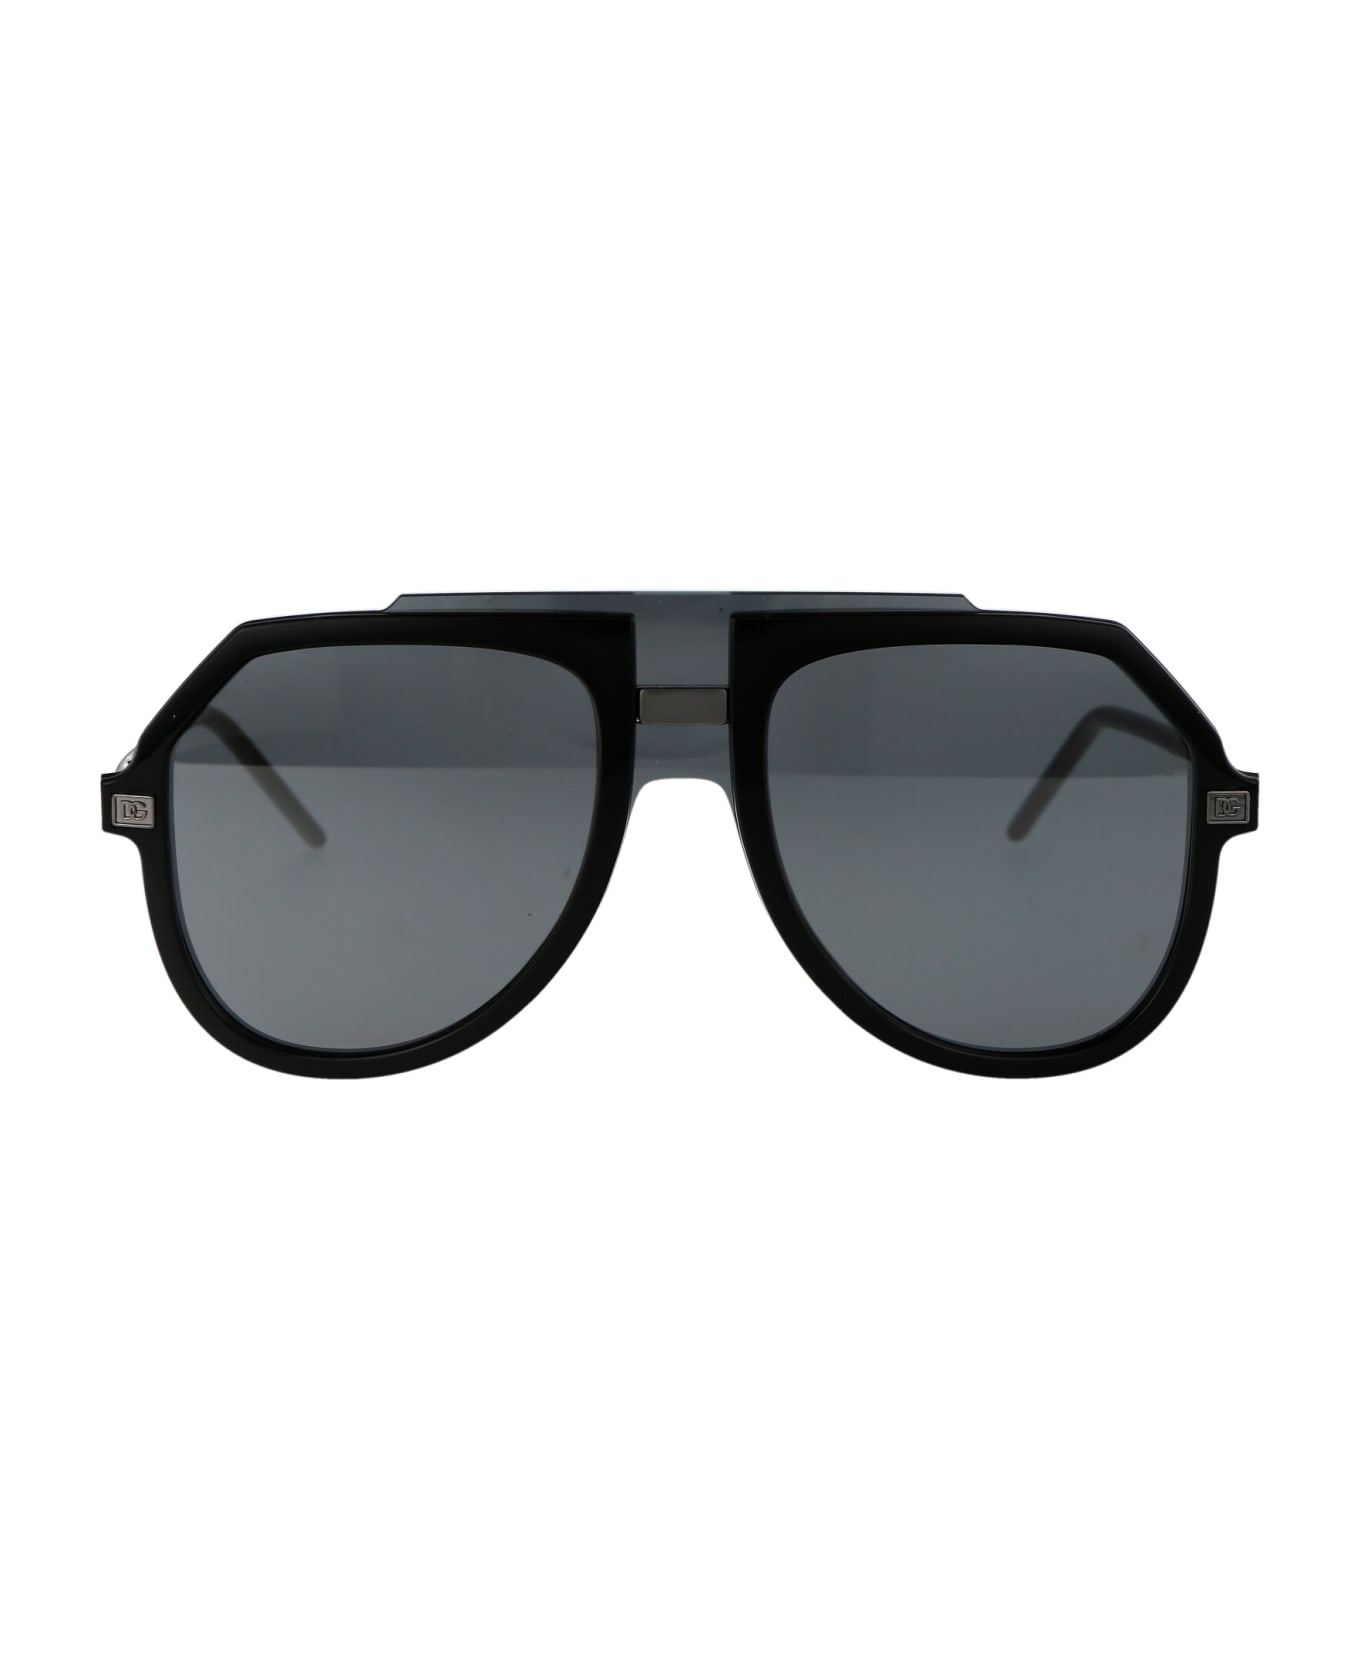 Dolce & Gabbana Eyewear 0dg6195 Sunglasses - 501/6G BLACK サングラス